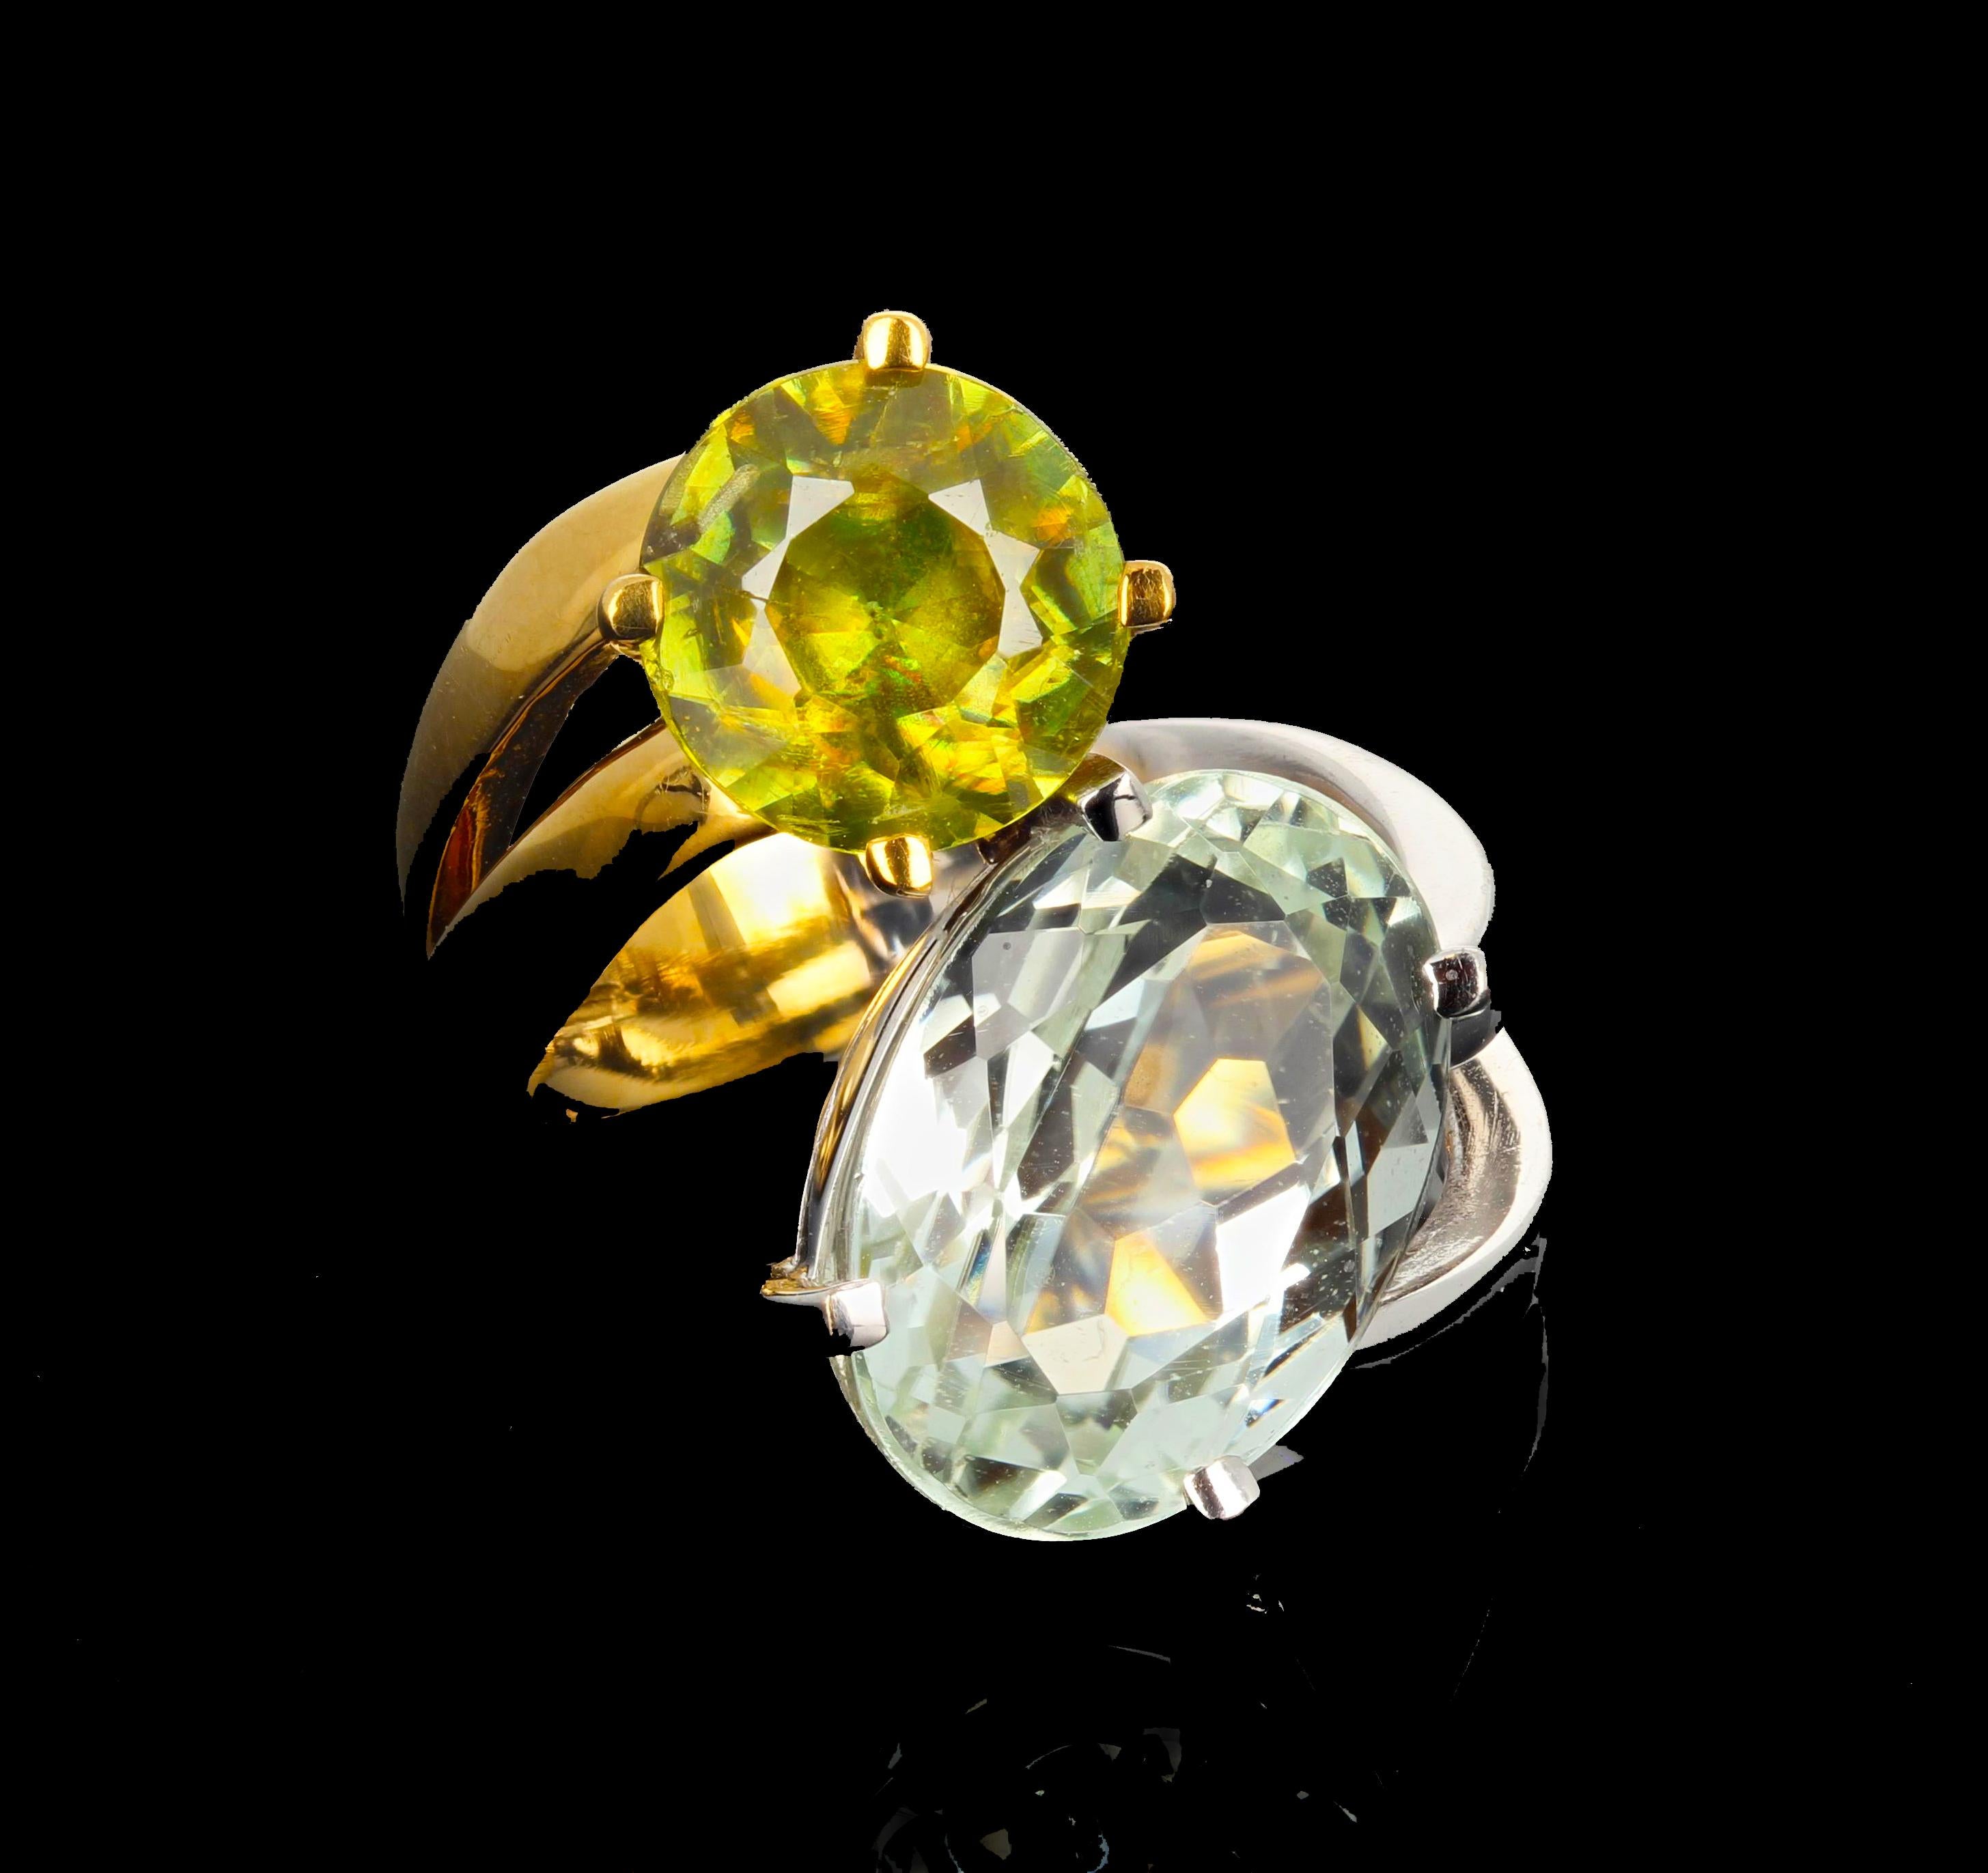 AJD Rare Splendid 6.8 Ct Amblygonite & 2.2 Ct Sphene Gold Cocktail Ring For Sale 4